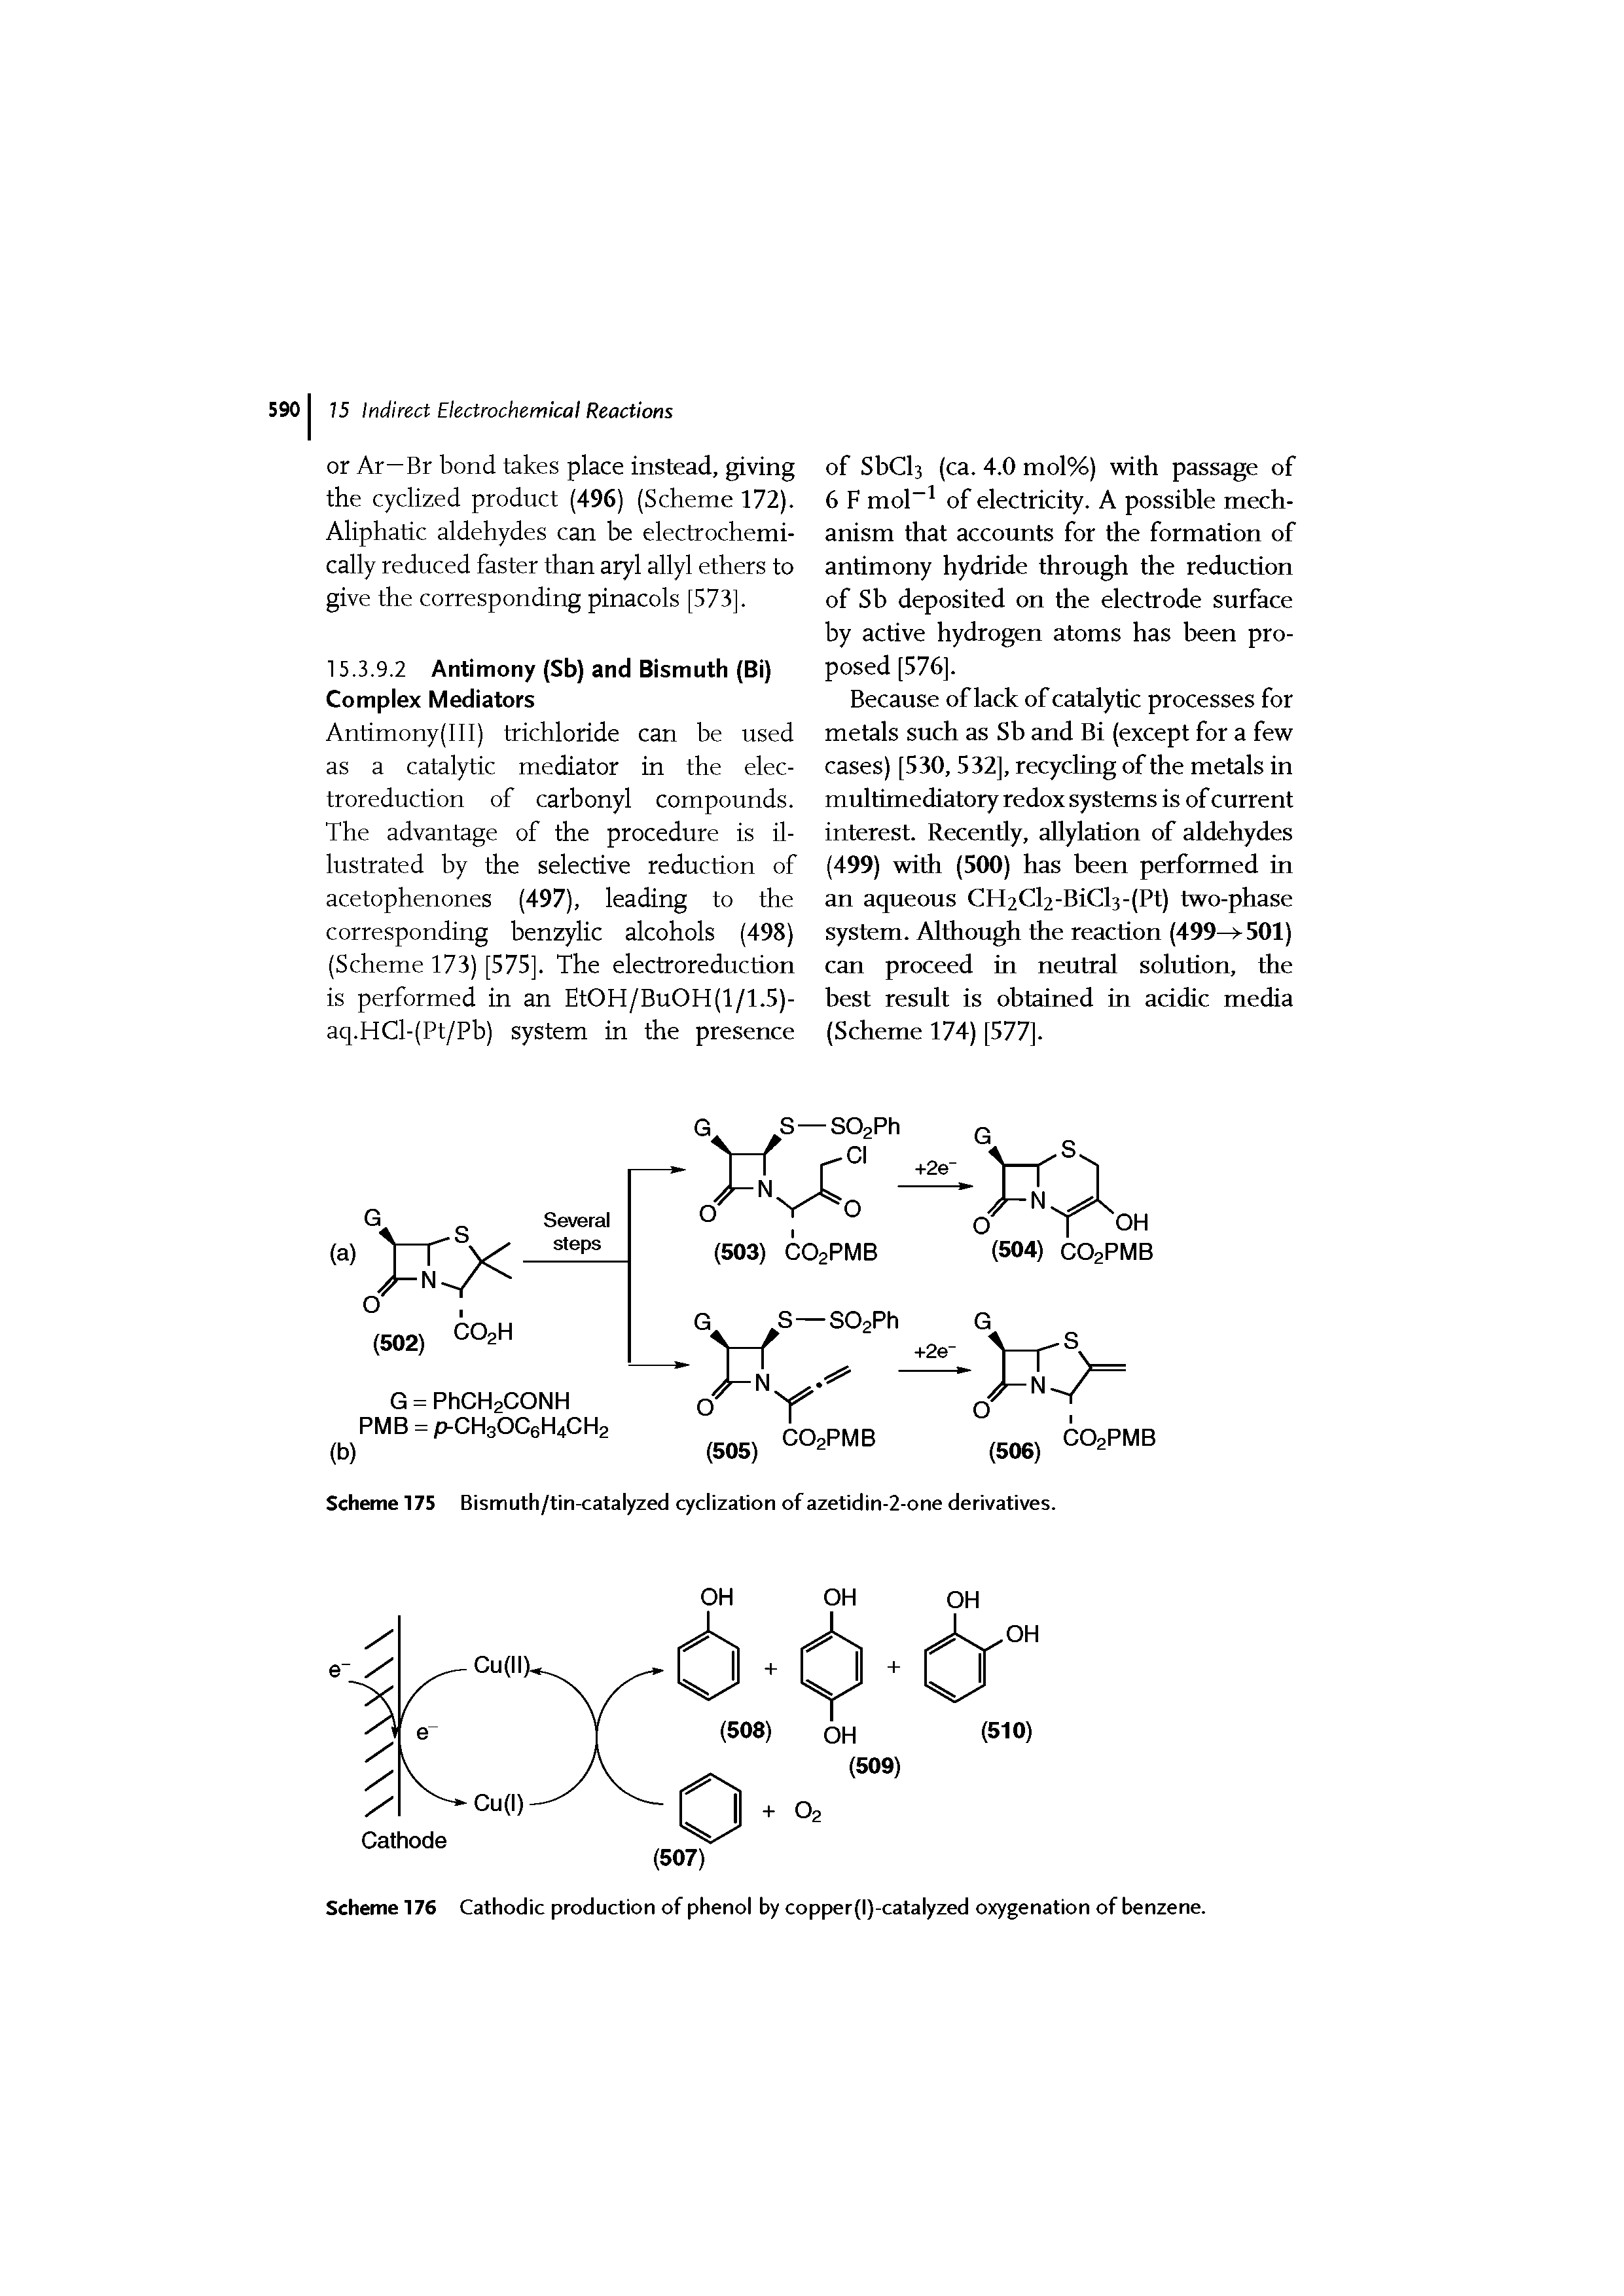 Scheme 176 Cathodic production of phenol by copper(l)-catalyzed oxygenation of benzene.